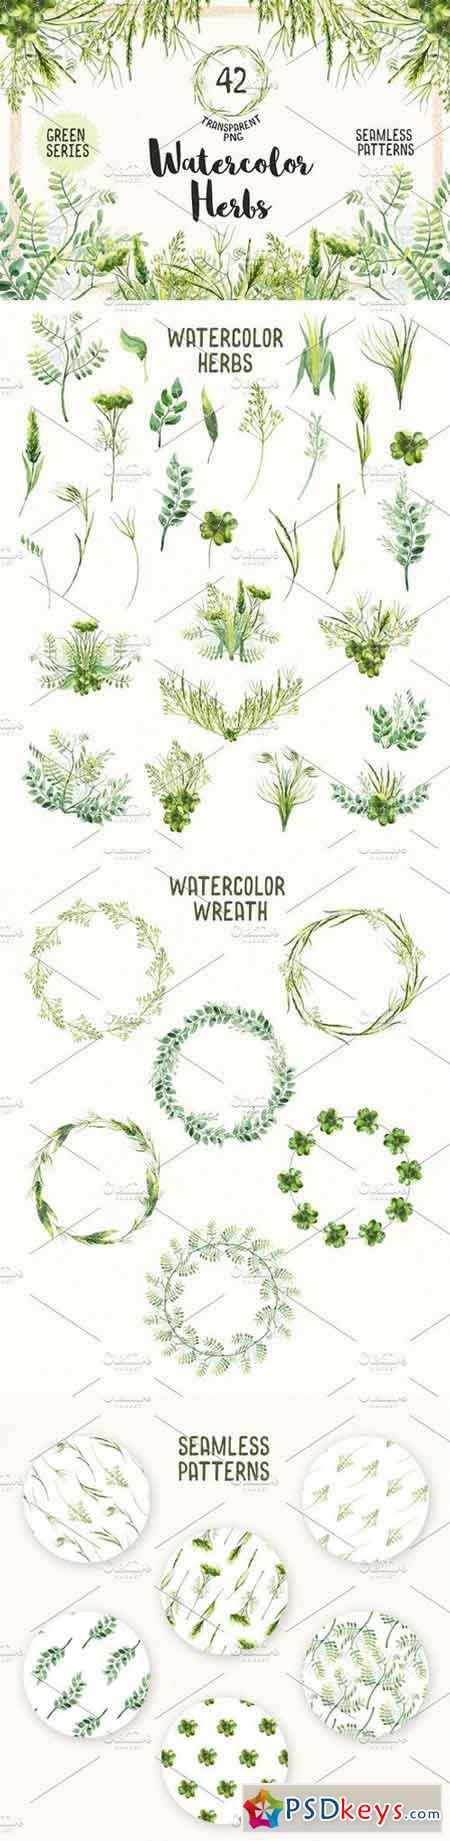 Watercolor Herbs Vol.2 738804